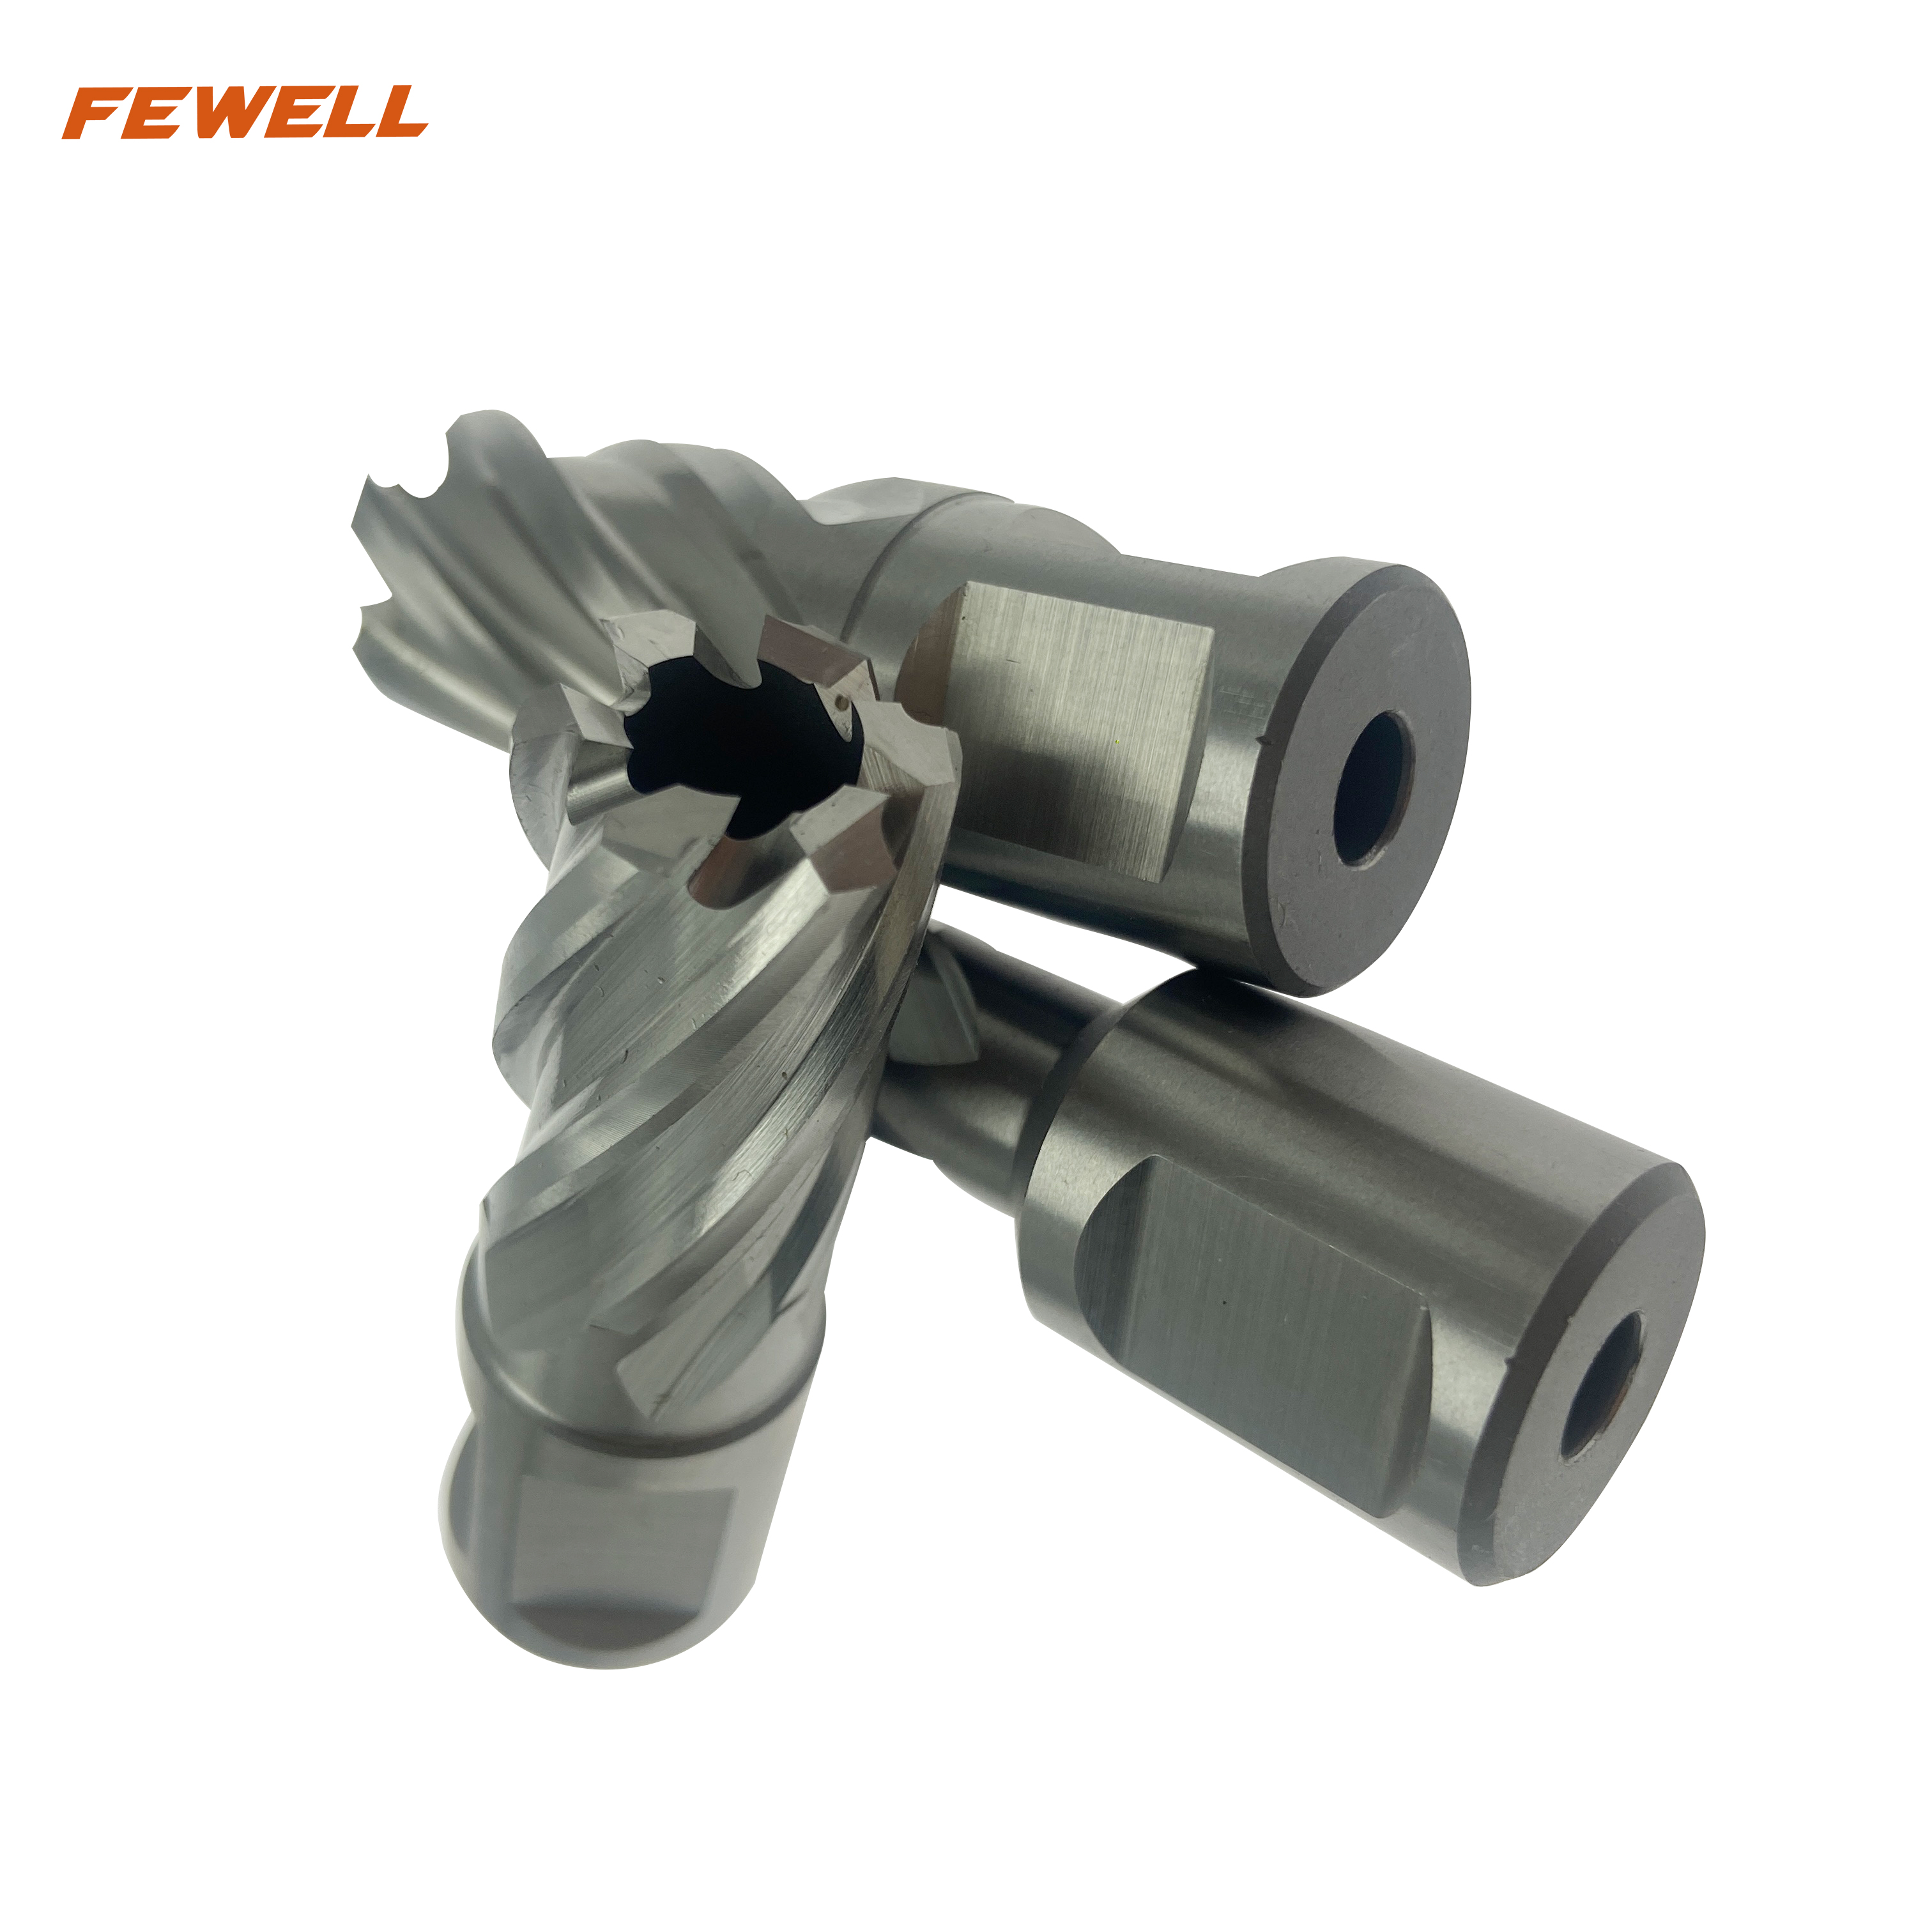 High quality weldon Shank 12/13/16/18/20mm HSS Annular Cutter Magnetic broach core drill bit for Metal Cutting